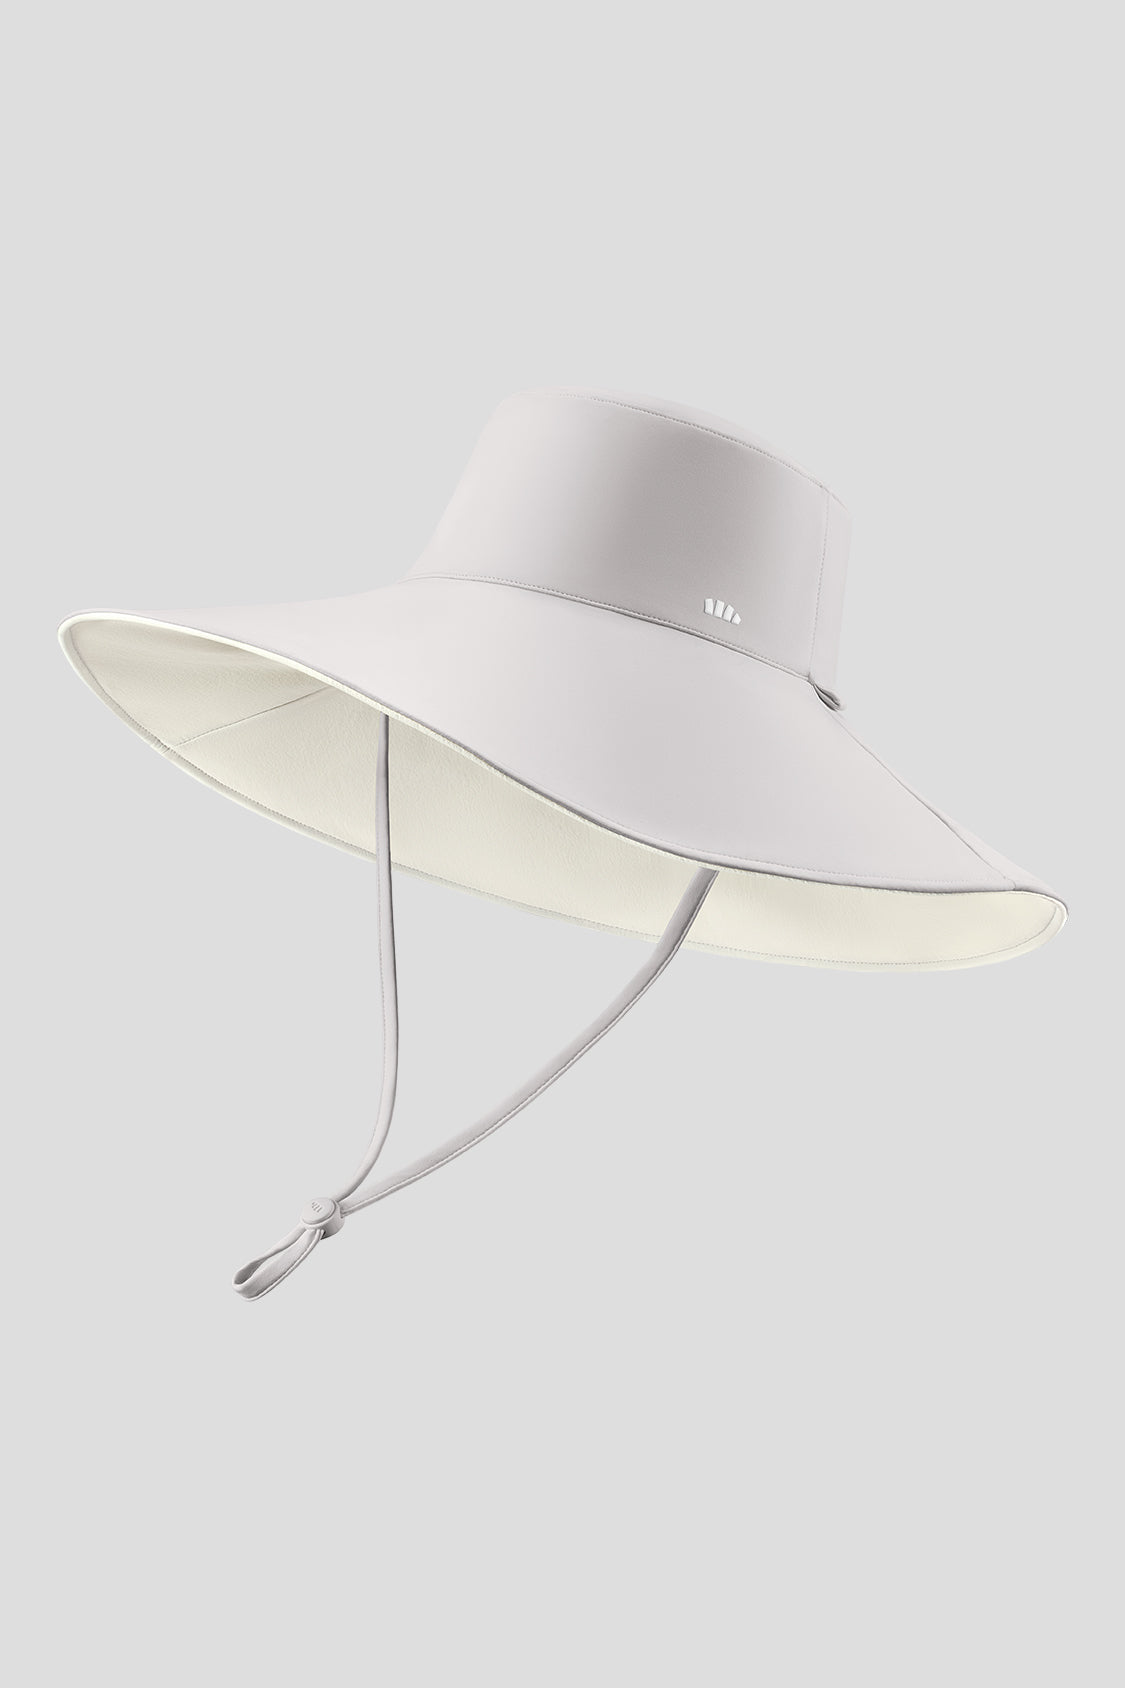 beneunder women's sun hats upf50+ #color_deep reock gray - white